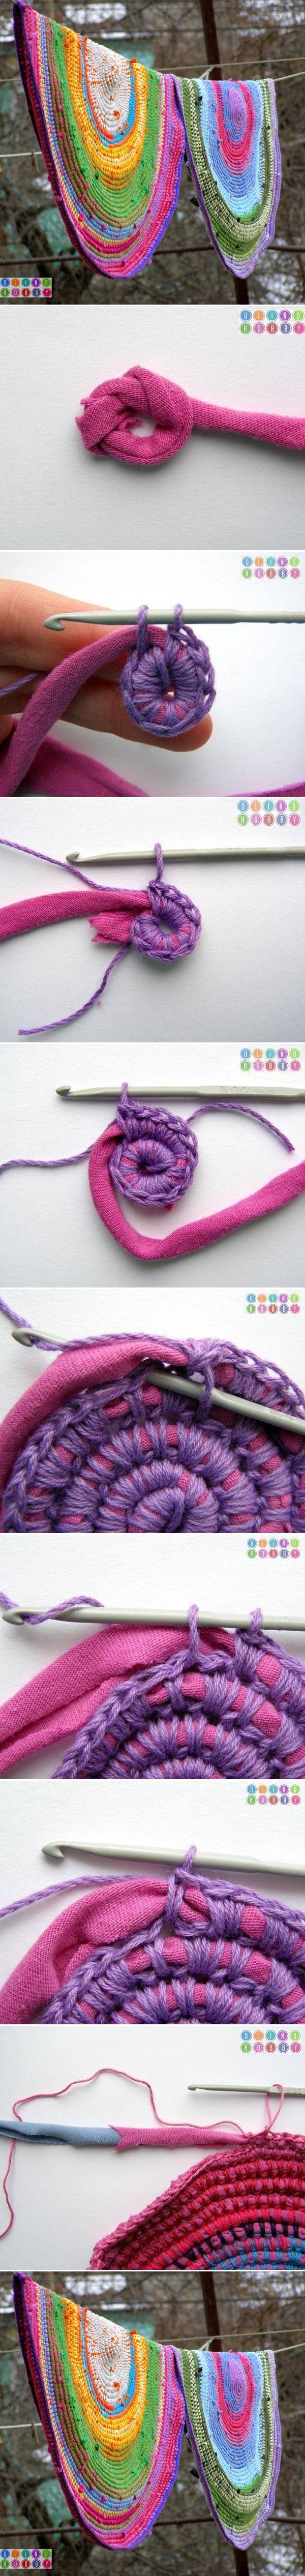 DIY Crochet Rug with Fabric Scraps 2